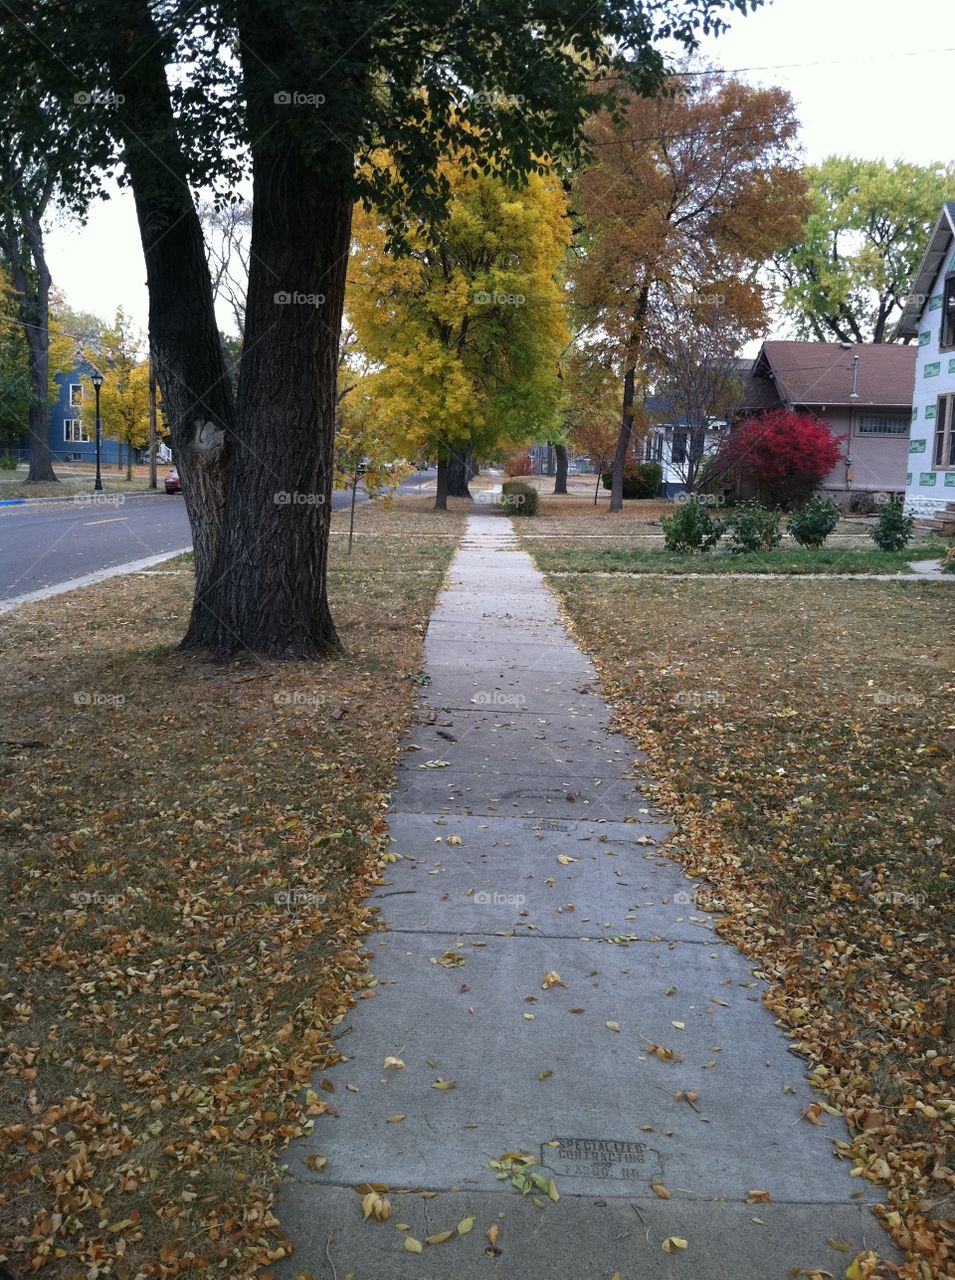 Sidewalk in a neighborhood on a nice, colorful autumn day